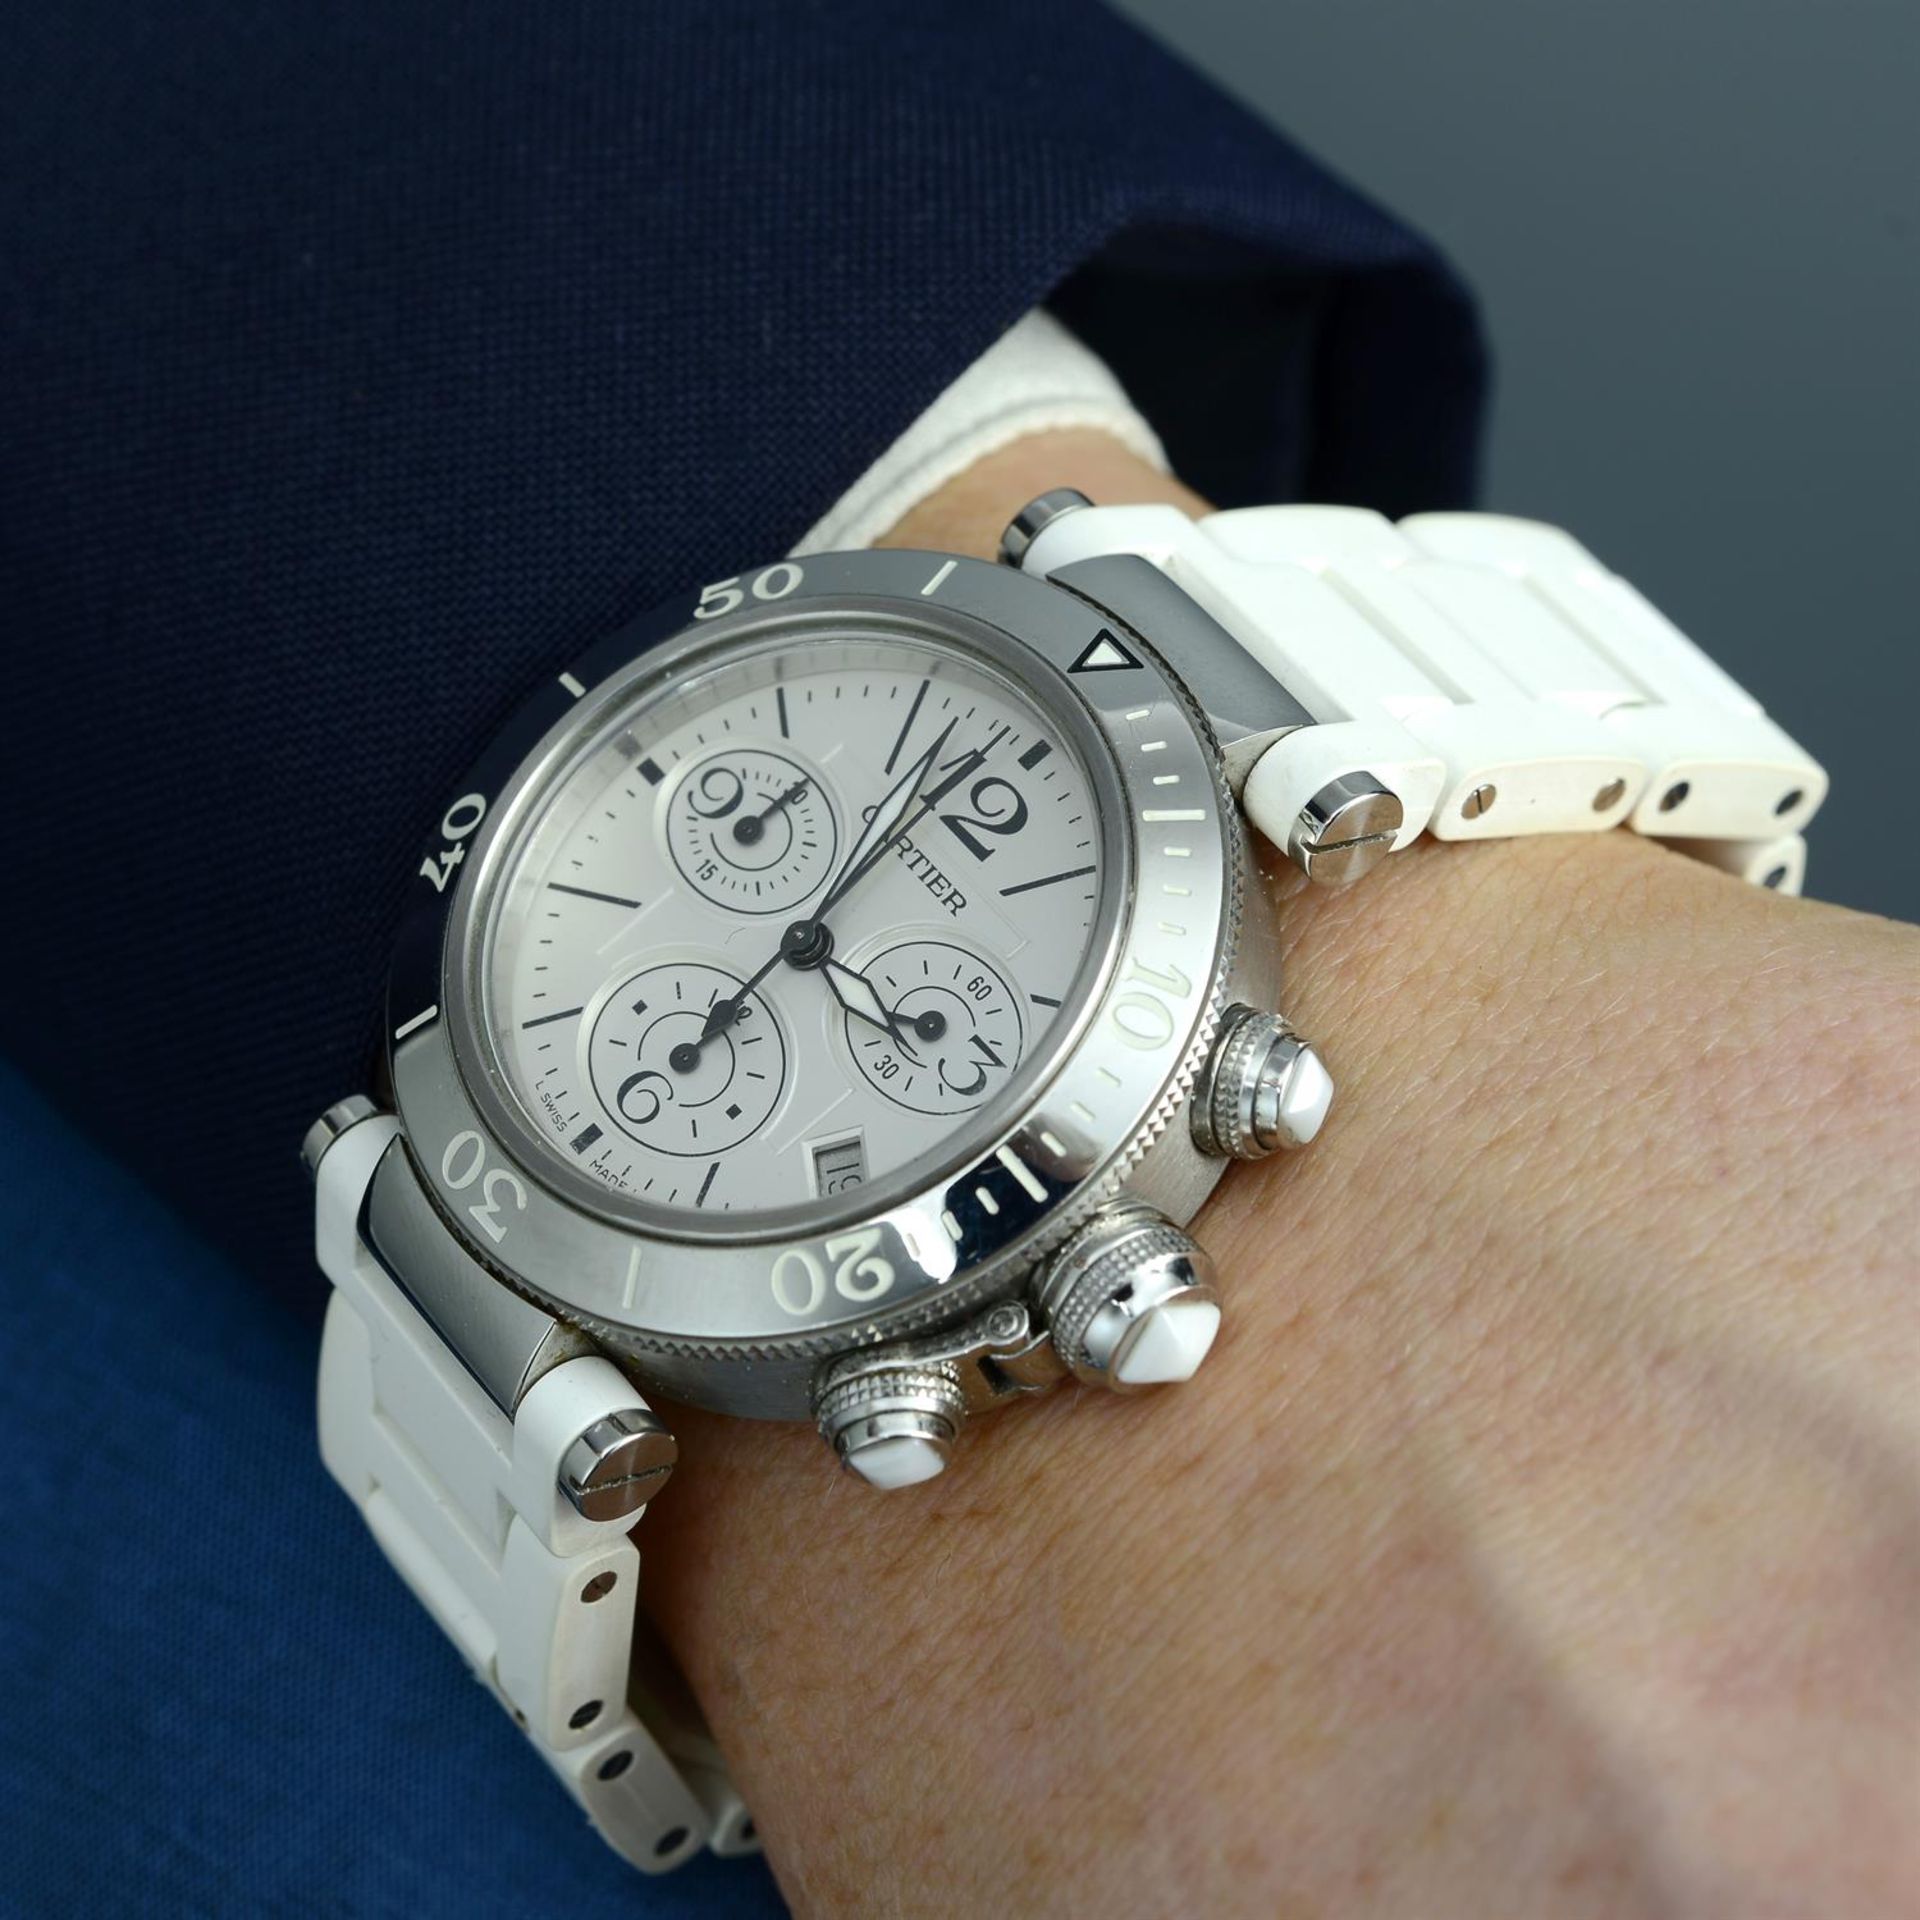 CARTIER - a bi-material Pasha chronograph bracelet watch, 37mm. - Image 5 of 6